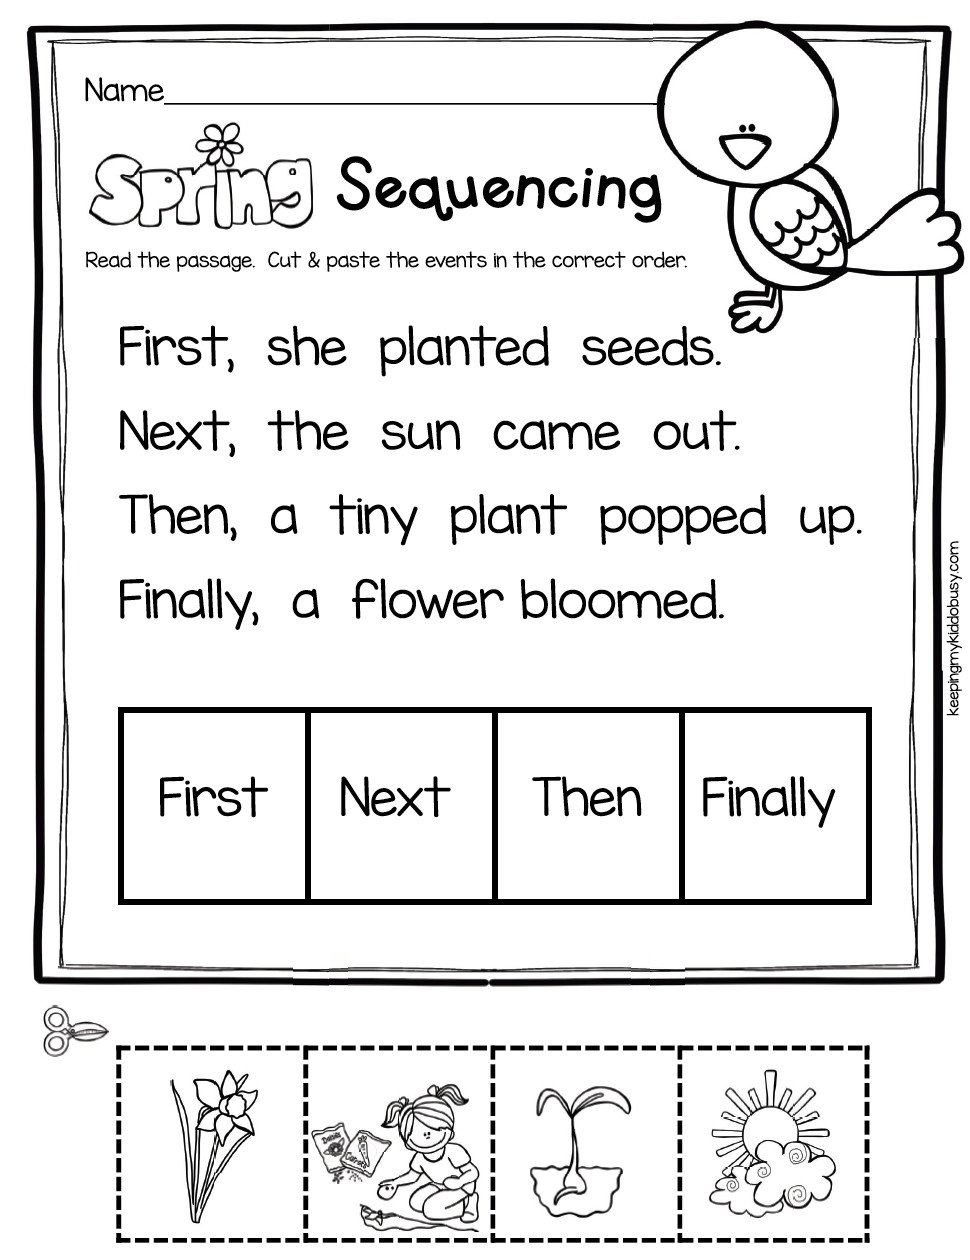 Story Sequencing Worksheets for Kindergarten New Sequencing events Worksheet